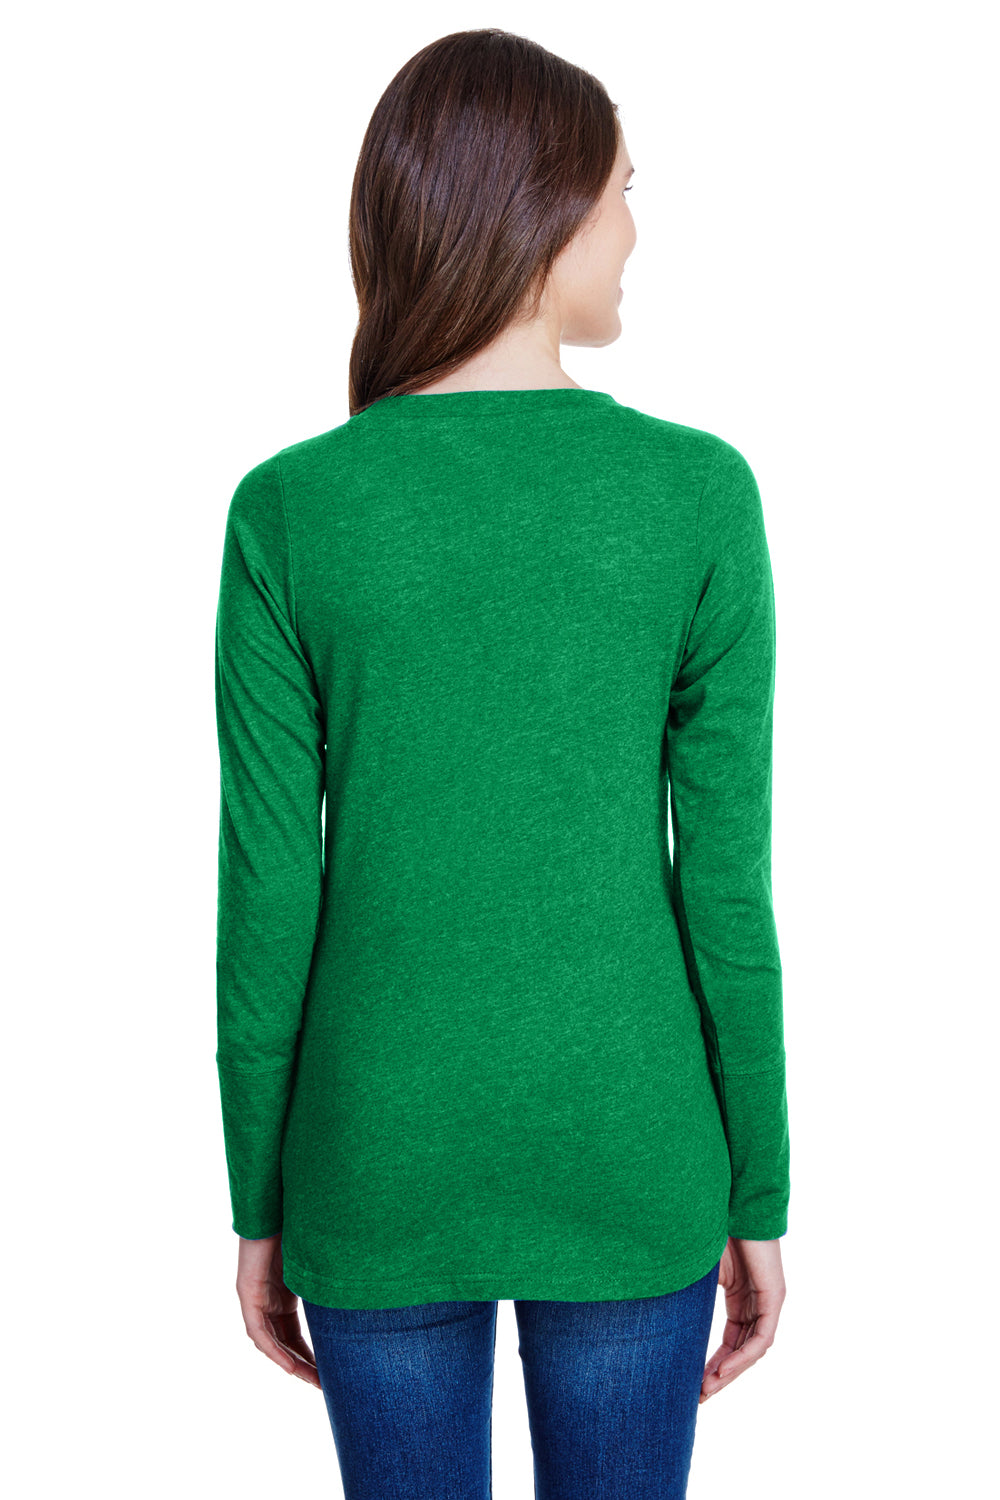 LAT LA3538 Womens Fine Jersey Lace Up Long Sleeve V-Neck T-Shirt Kelly Green Back